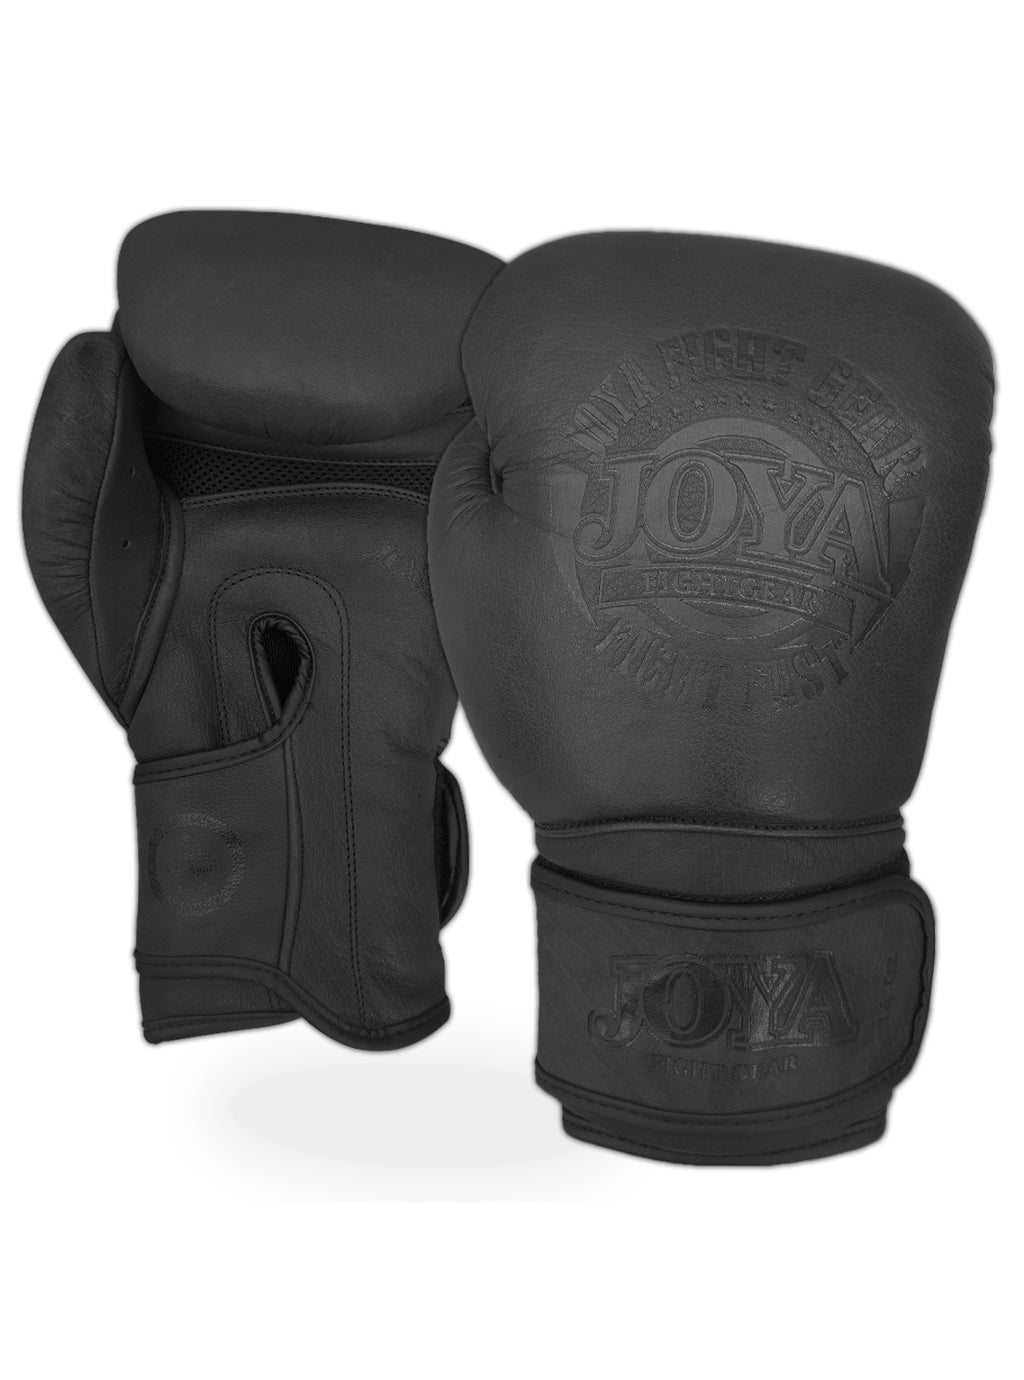 Joya Fightgear - Gant de boxe - Femme - Tigre - 12oz